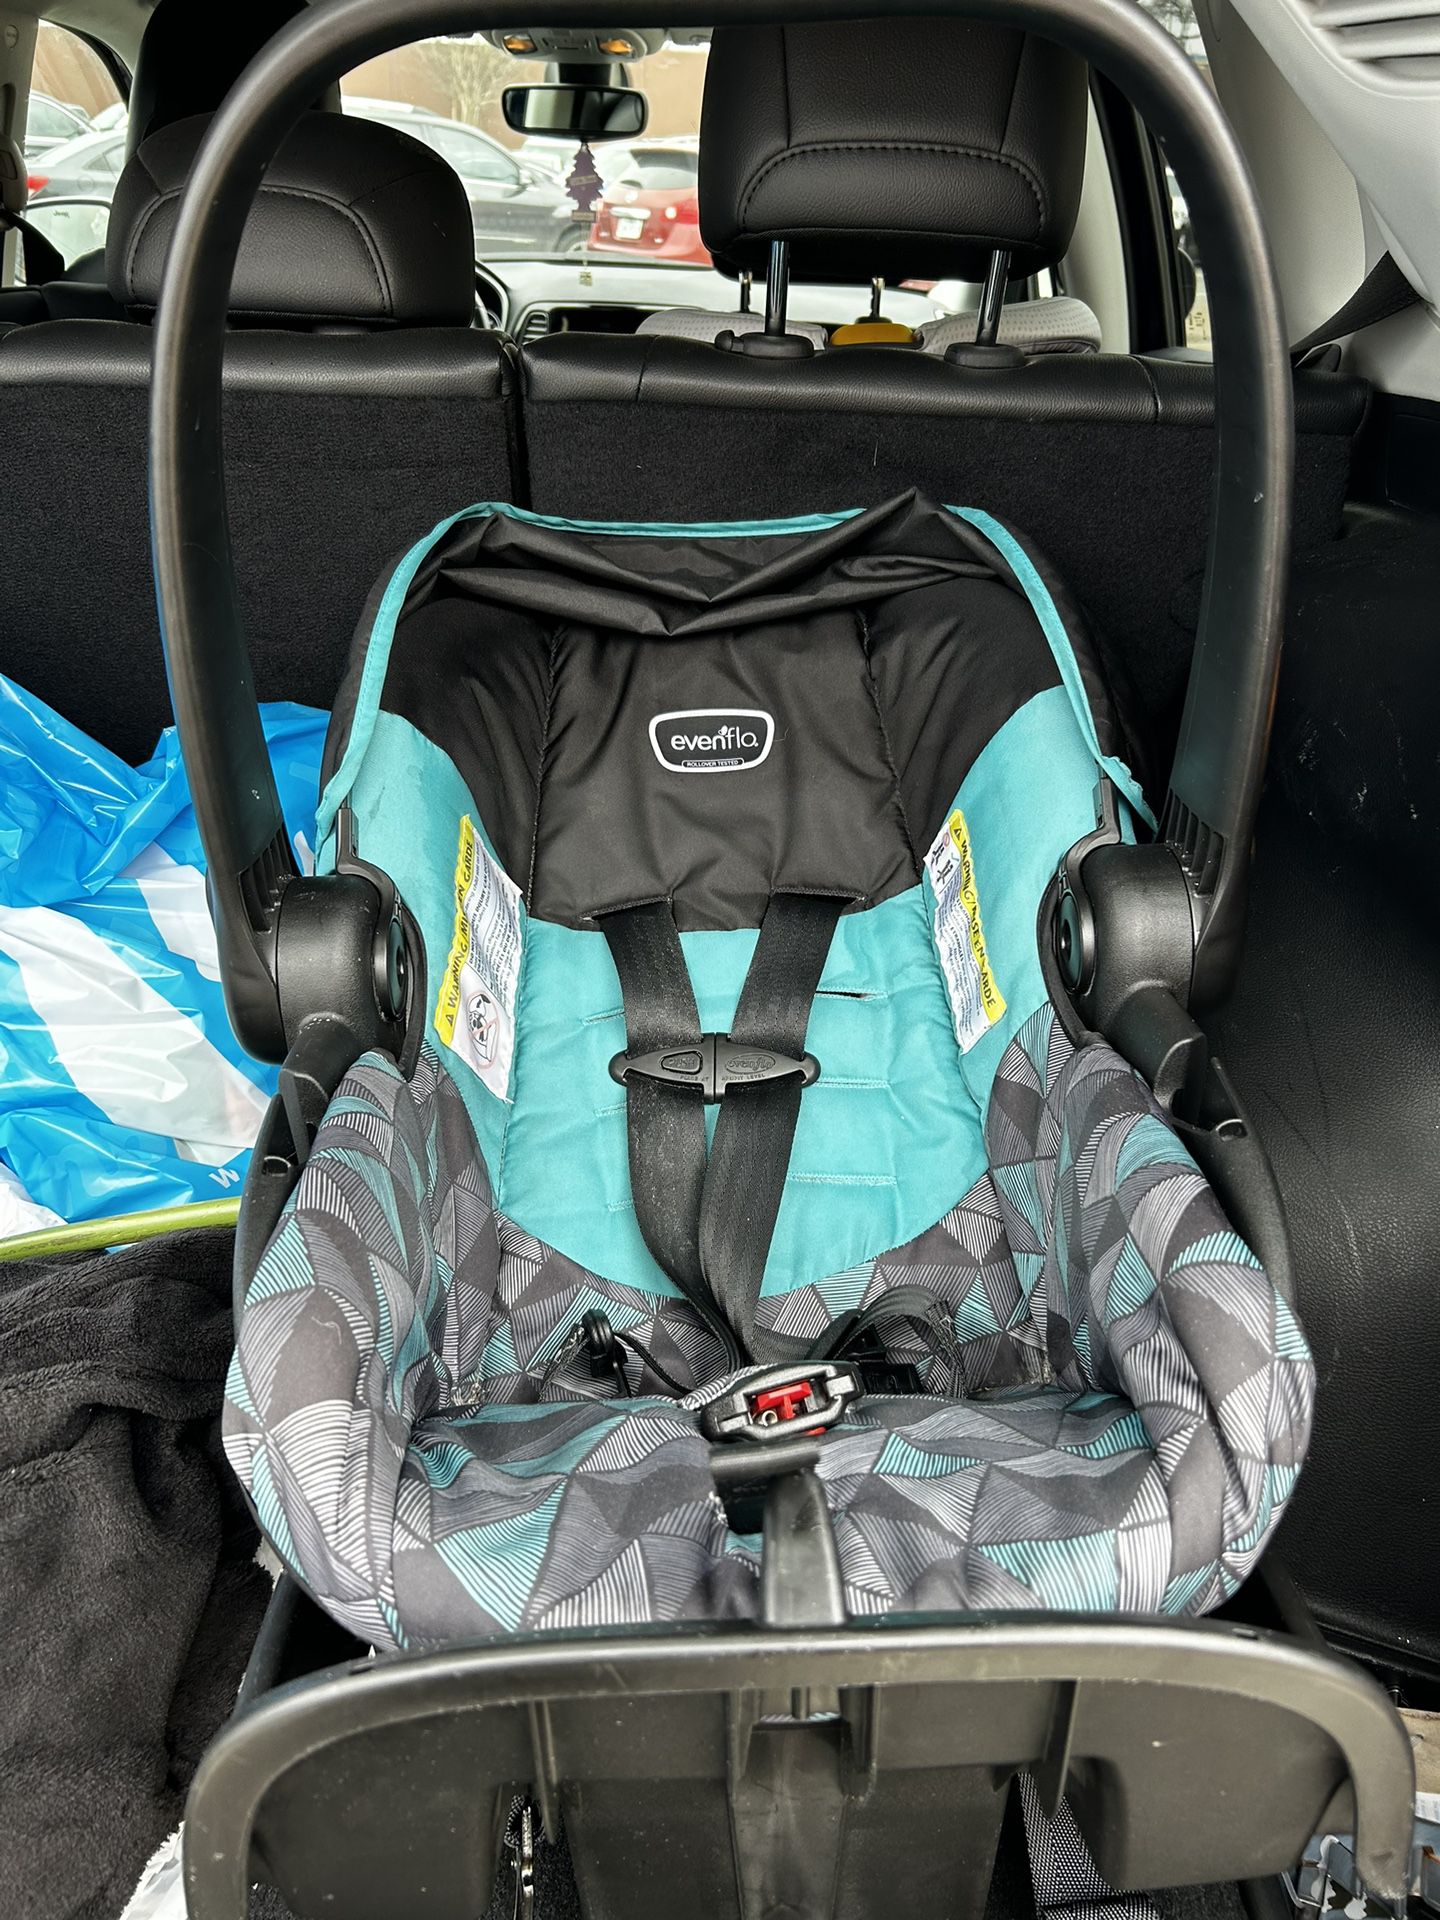 Evenflo NurtureMax Infant Car seat